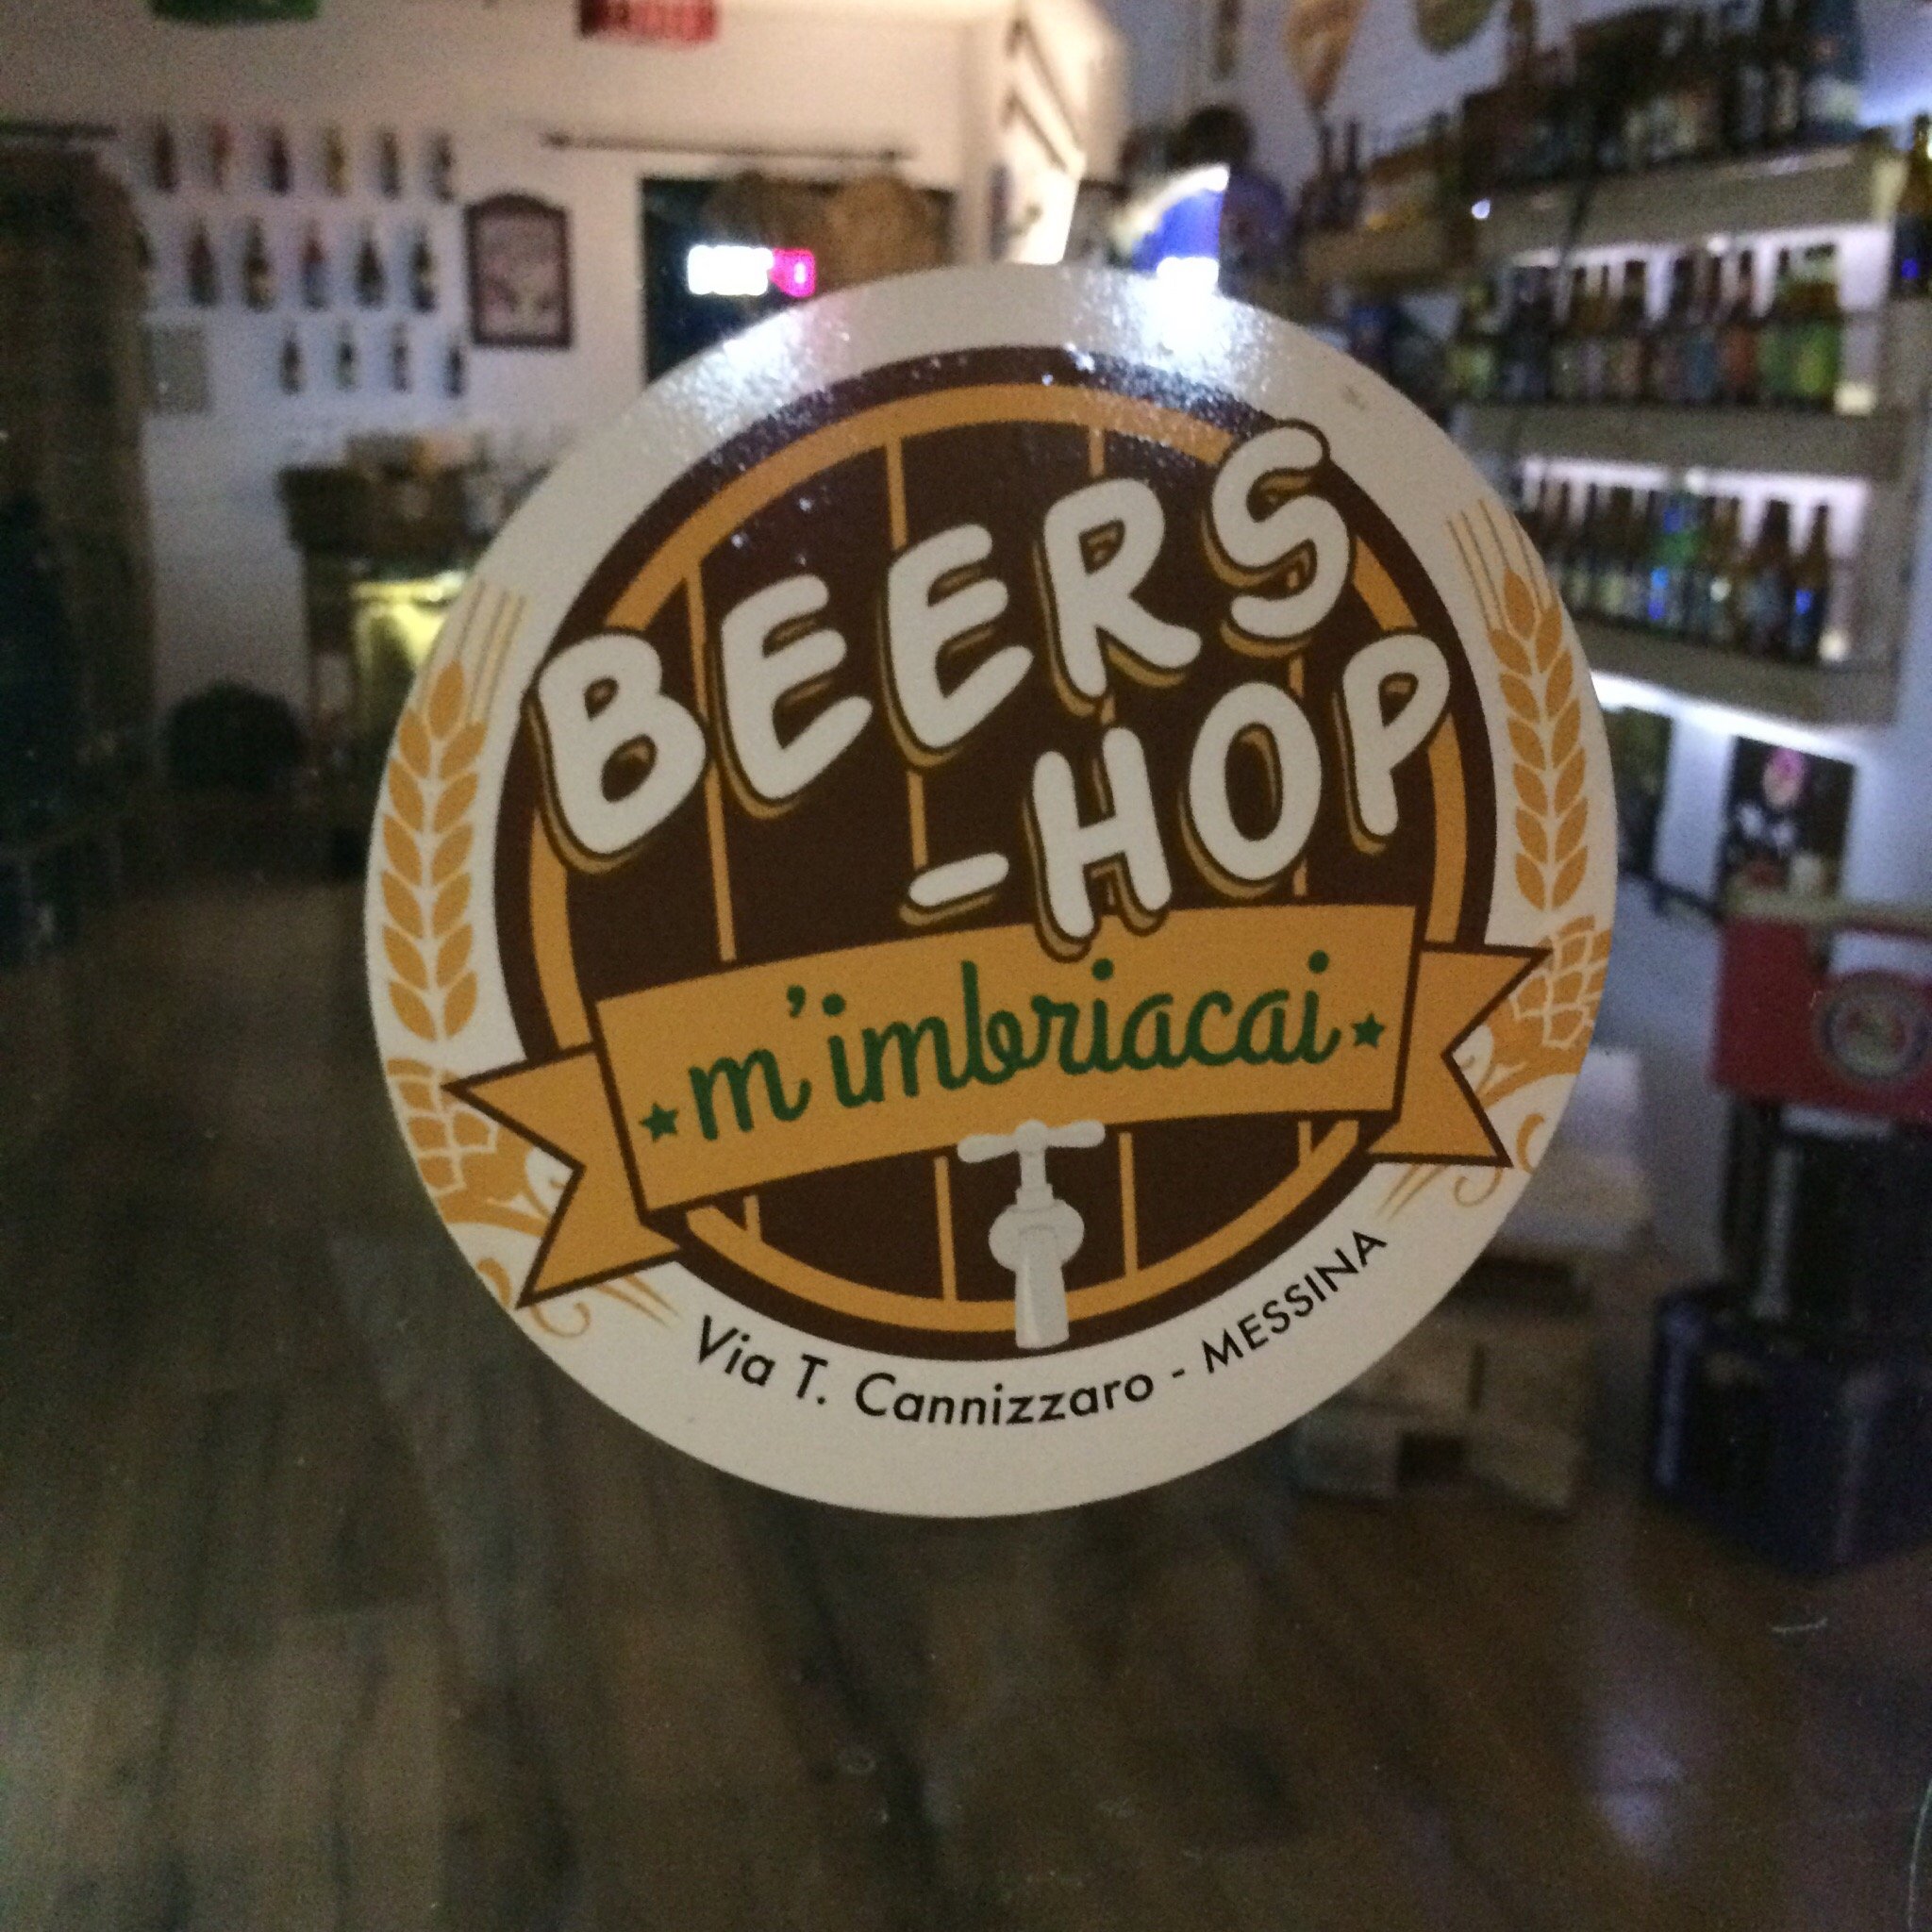 Beers-hop M'imbriacai, Messina